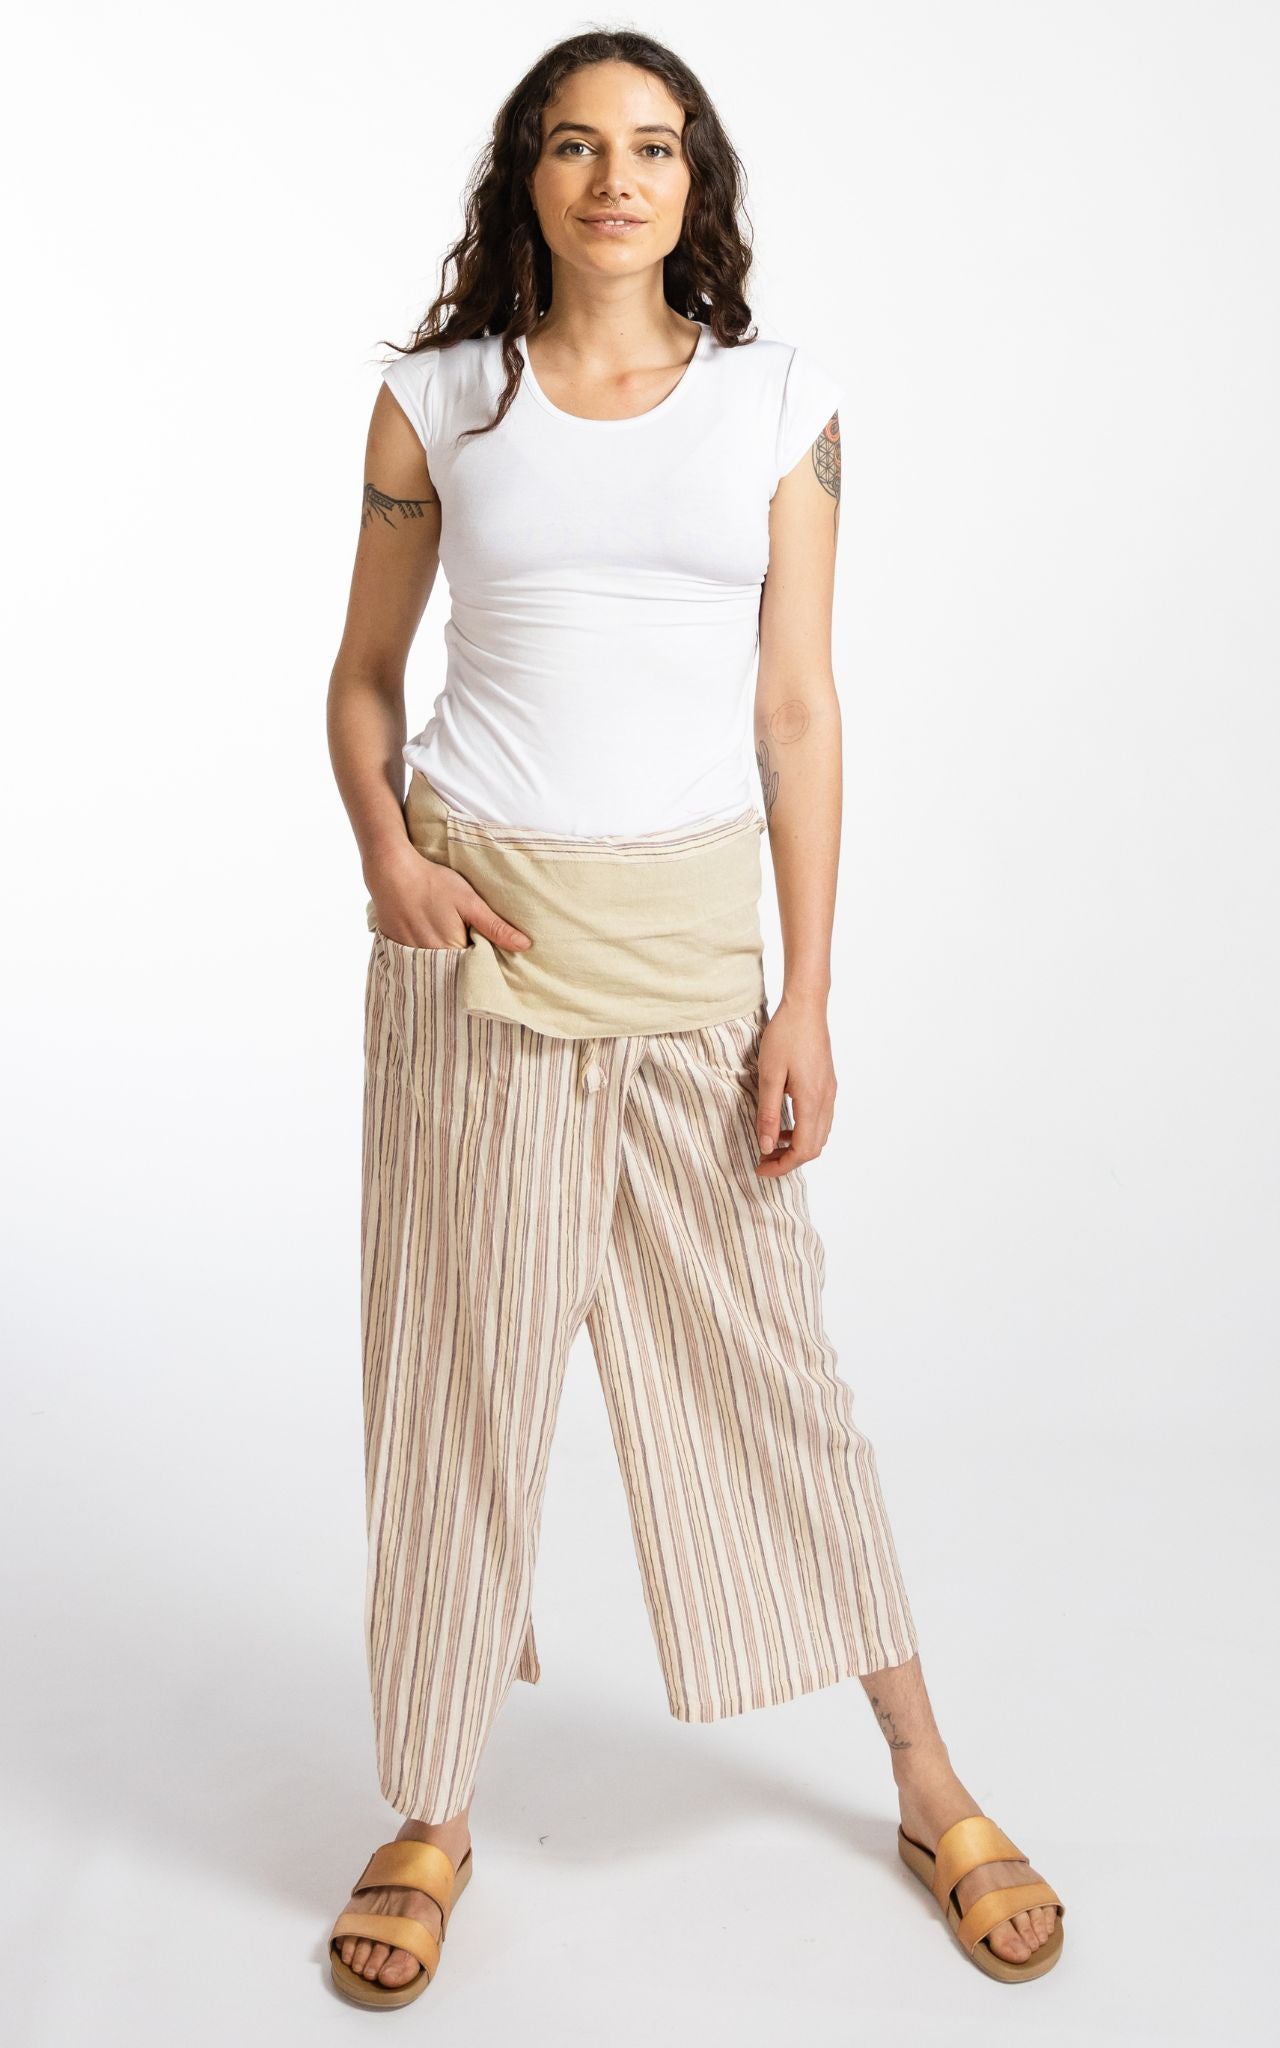 Surya Australia Ethical Cotton Thai Fisherman Pants - Striped Natural